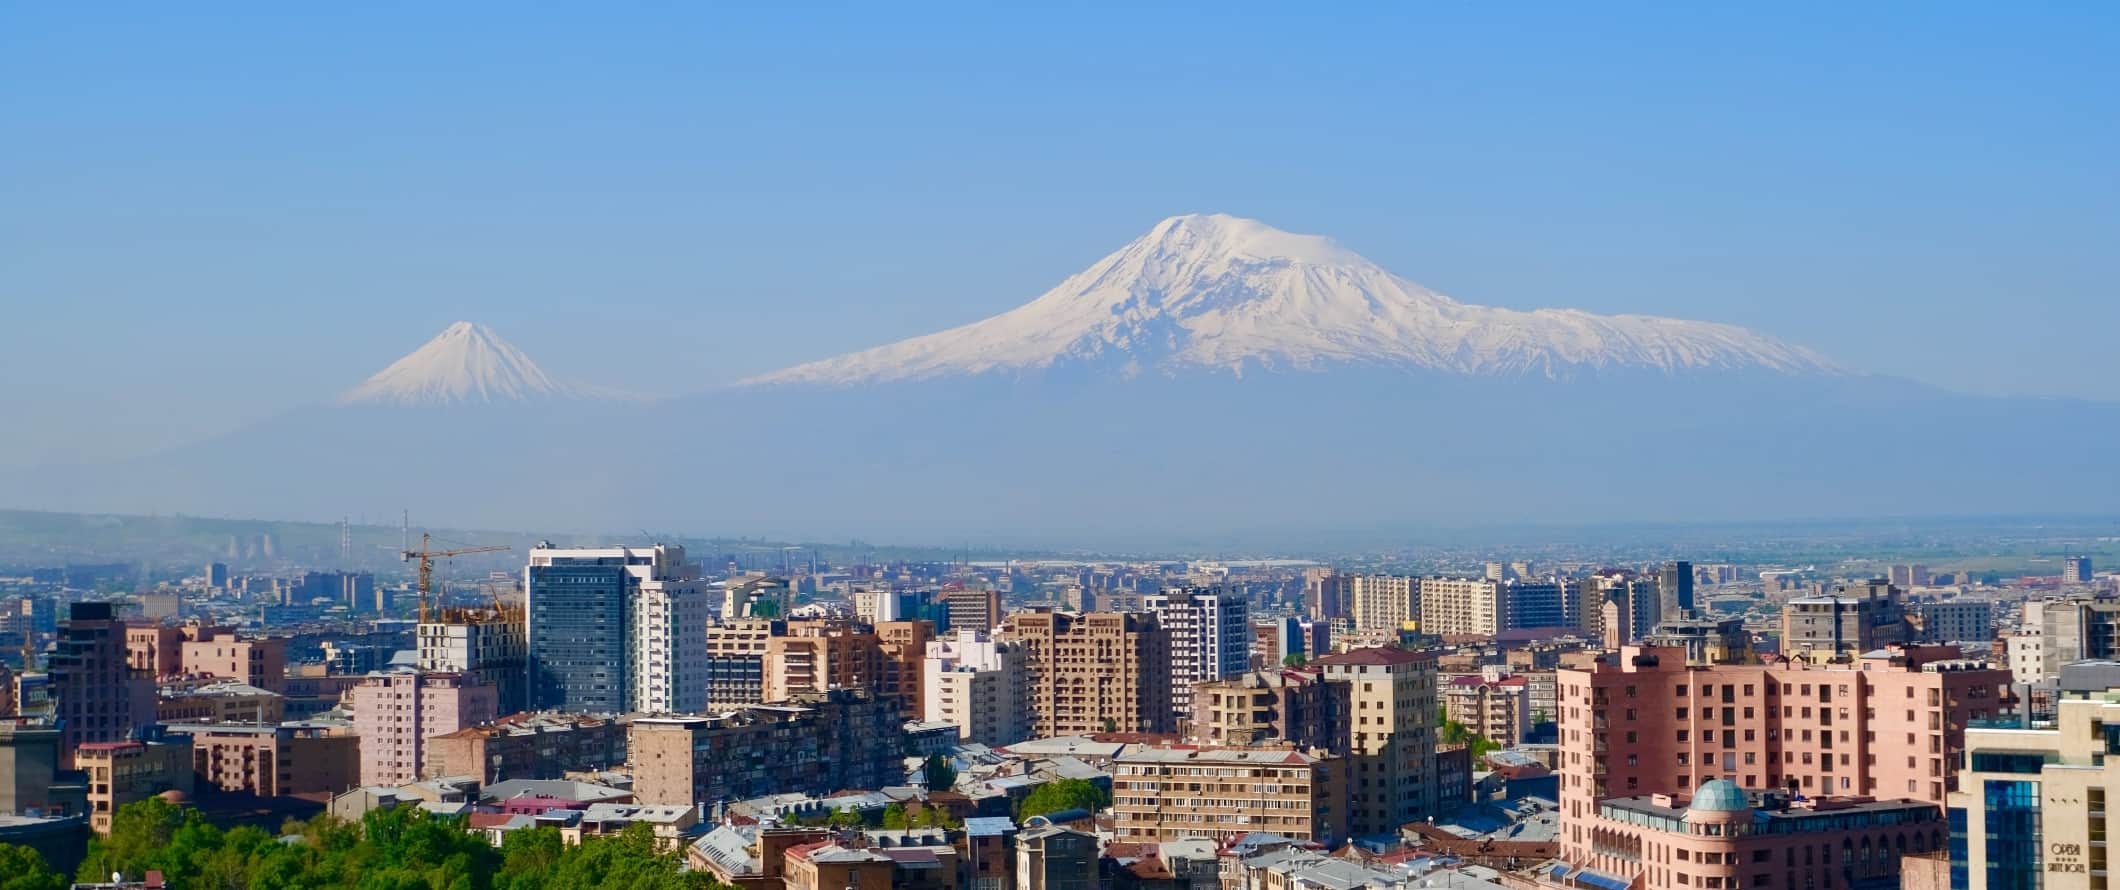 Mount Ararat and the Yerevan skyline in Armenia